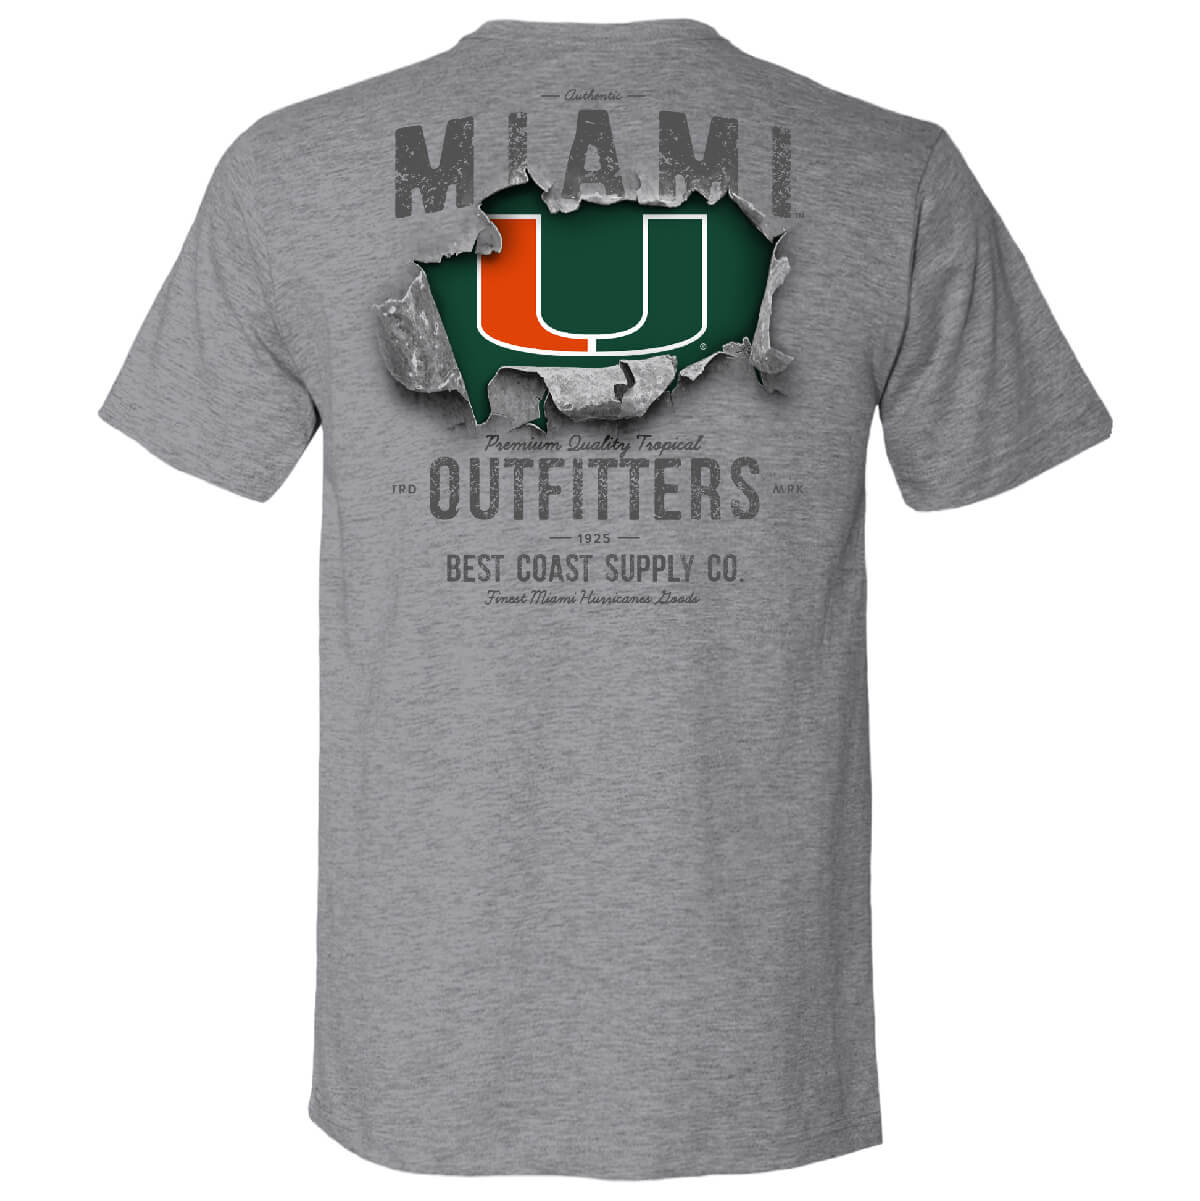 Miami Hurricanes FLOGROWN Bursting Logo T-Shirt - Grey